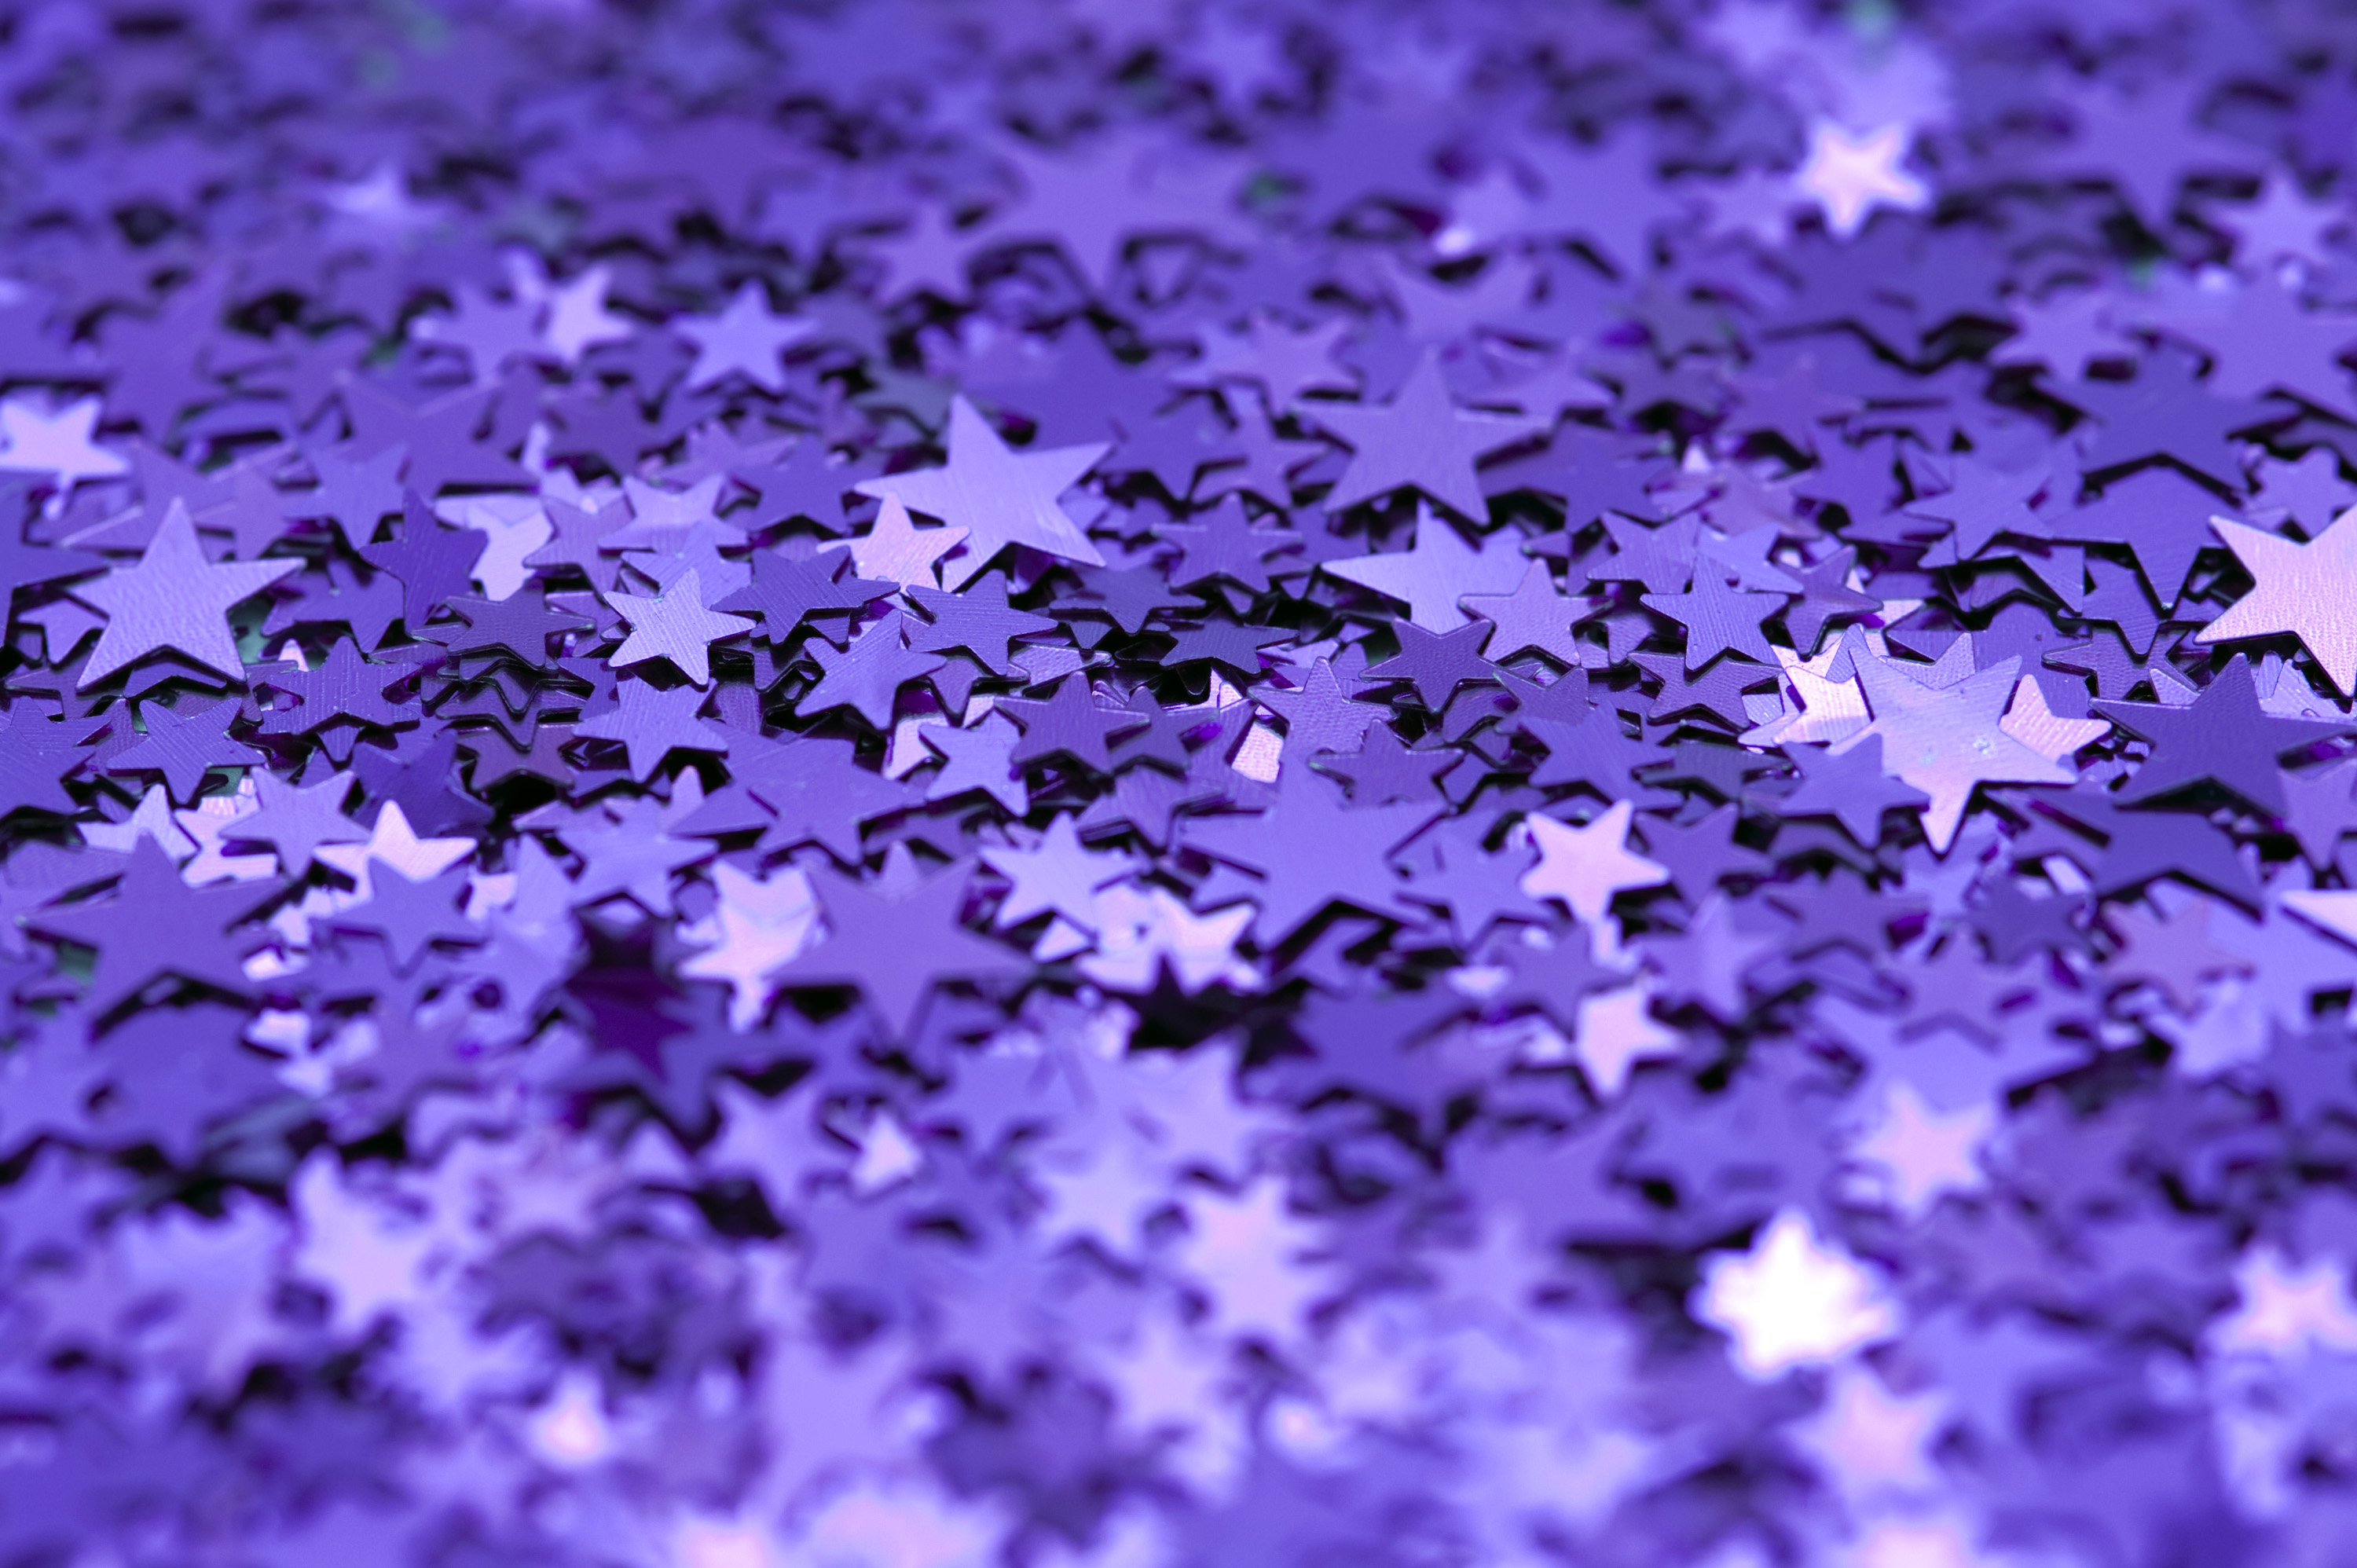 Original Image Of Purple Glitter Backdrop 1116kb